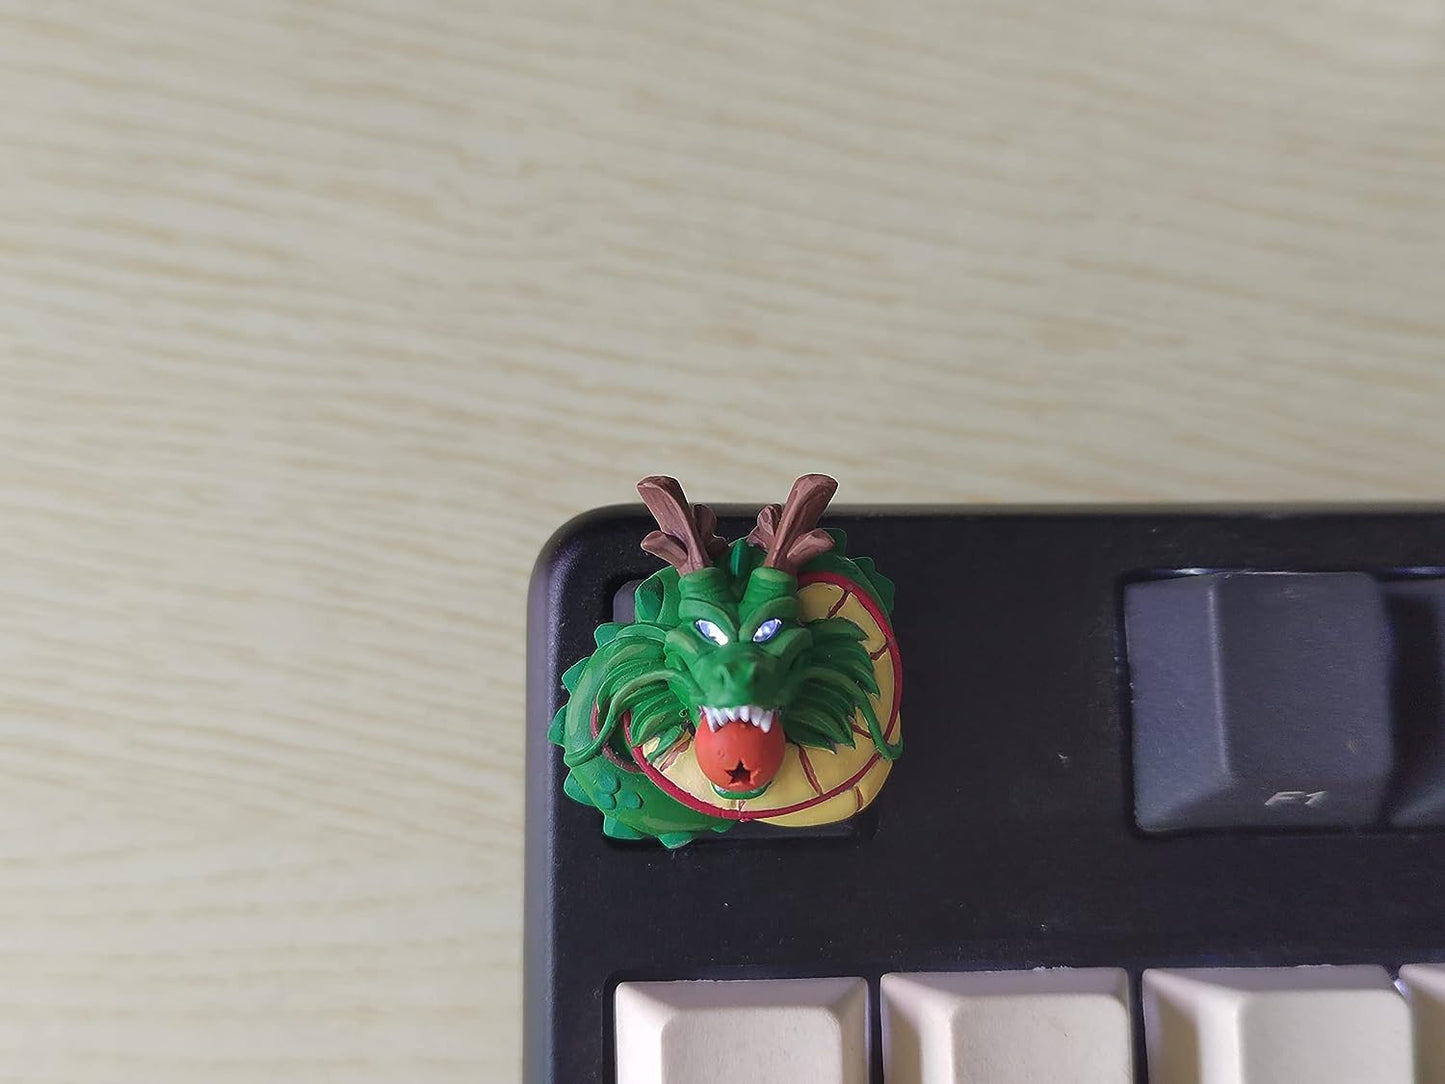 Dragon Ball key, dragon Shenron Handcrafted in Resin for MX Mechanical Keyboard, Custom Keyboard keycaps